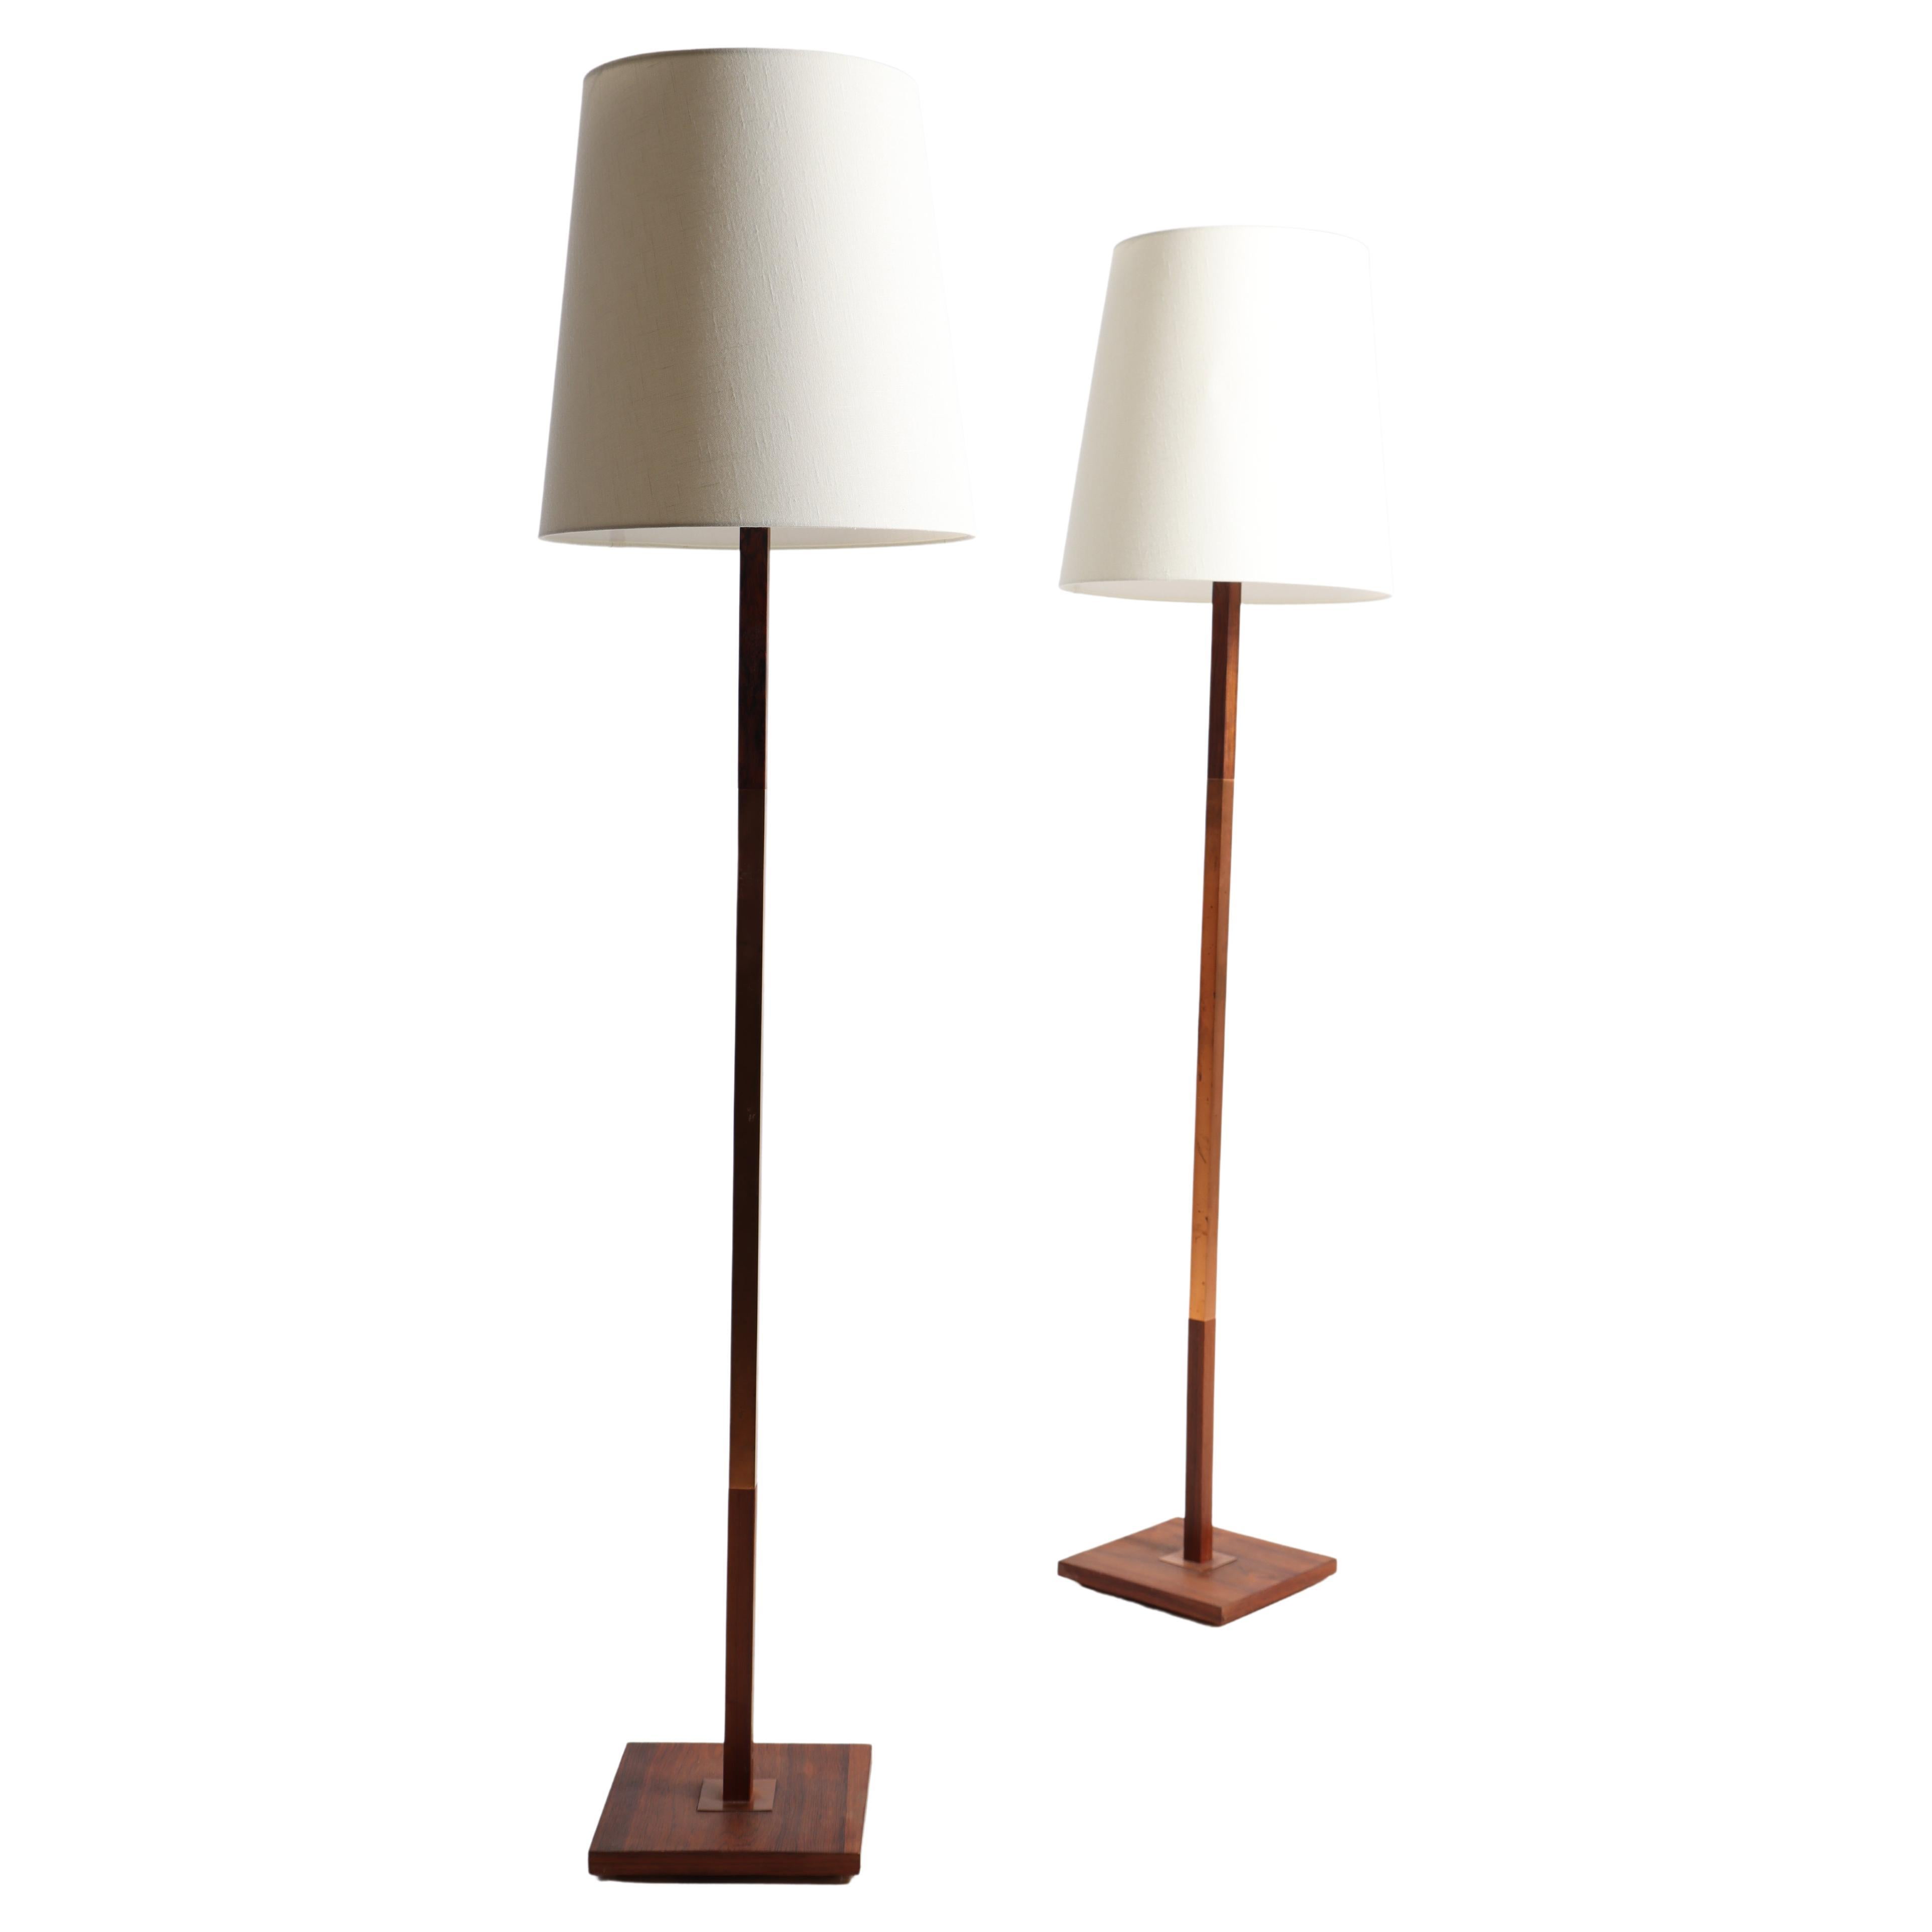 Pair of Midcentury Floor Lamps in Rosewood by Jo Hammerborg, 1960s For Sale